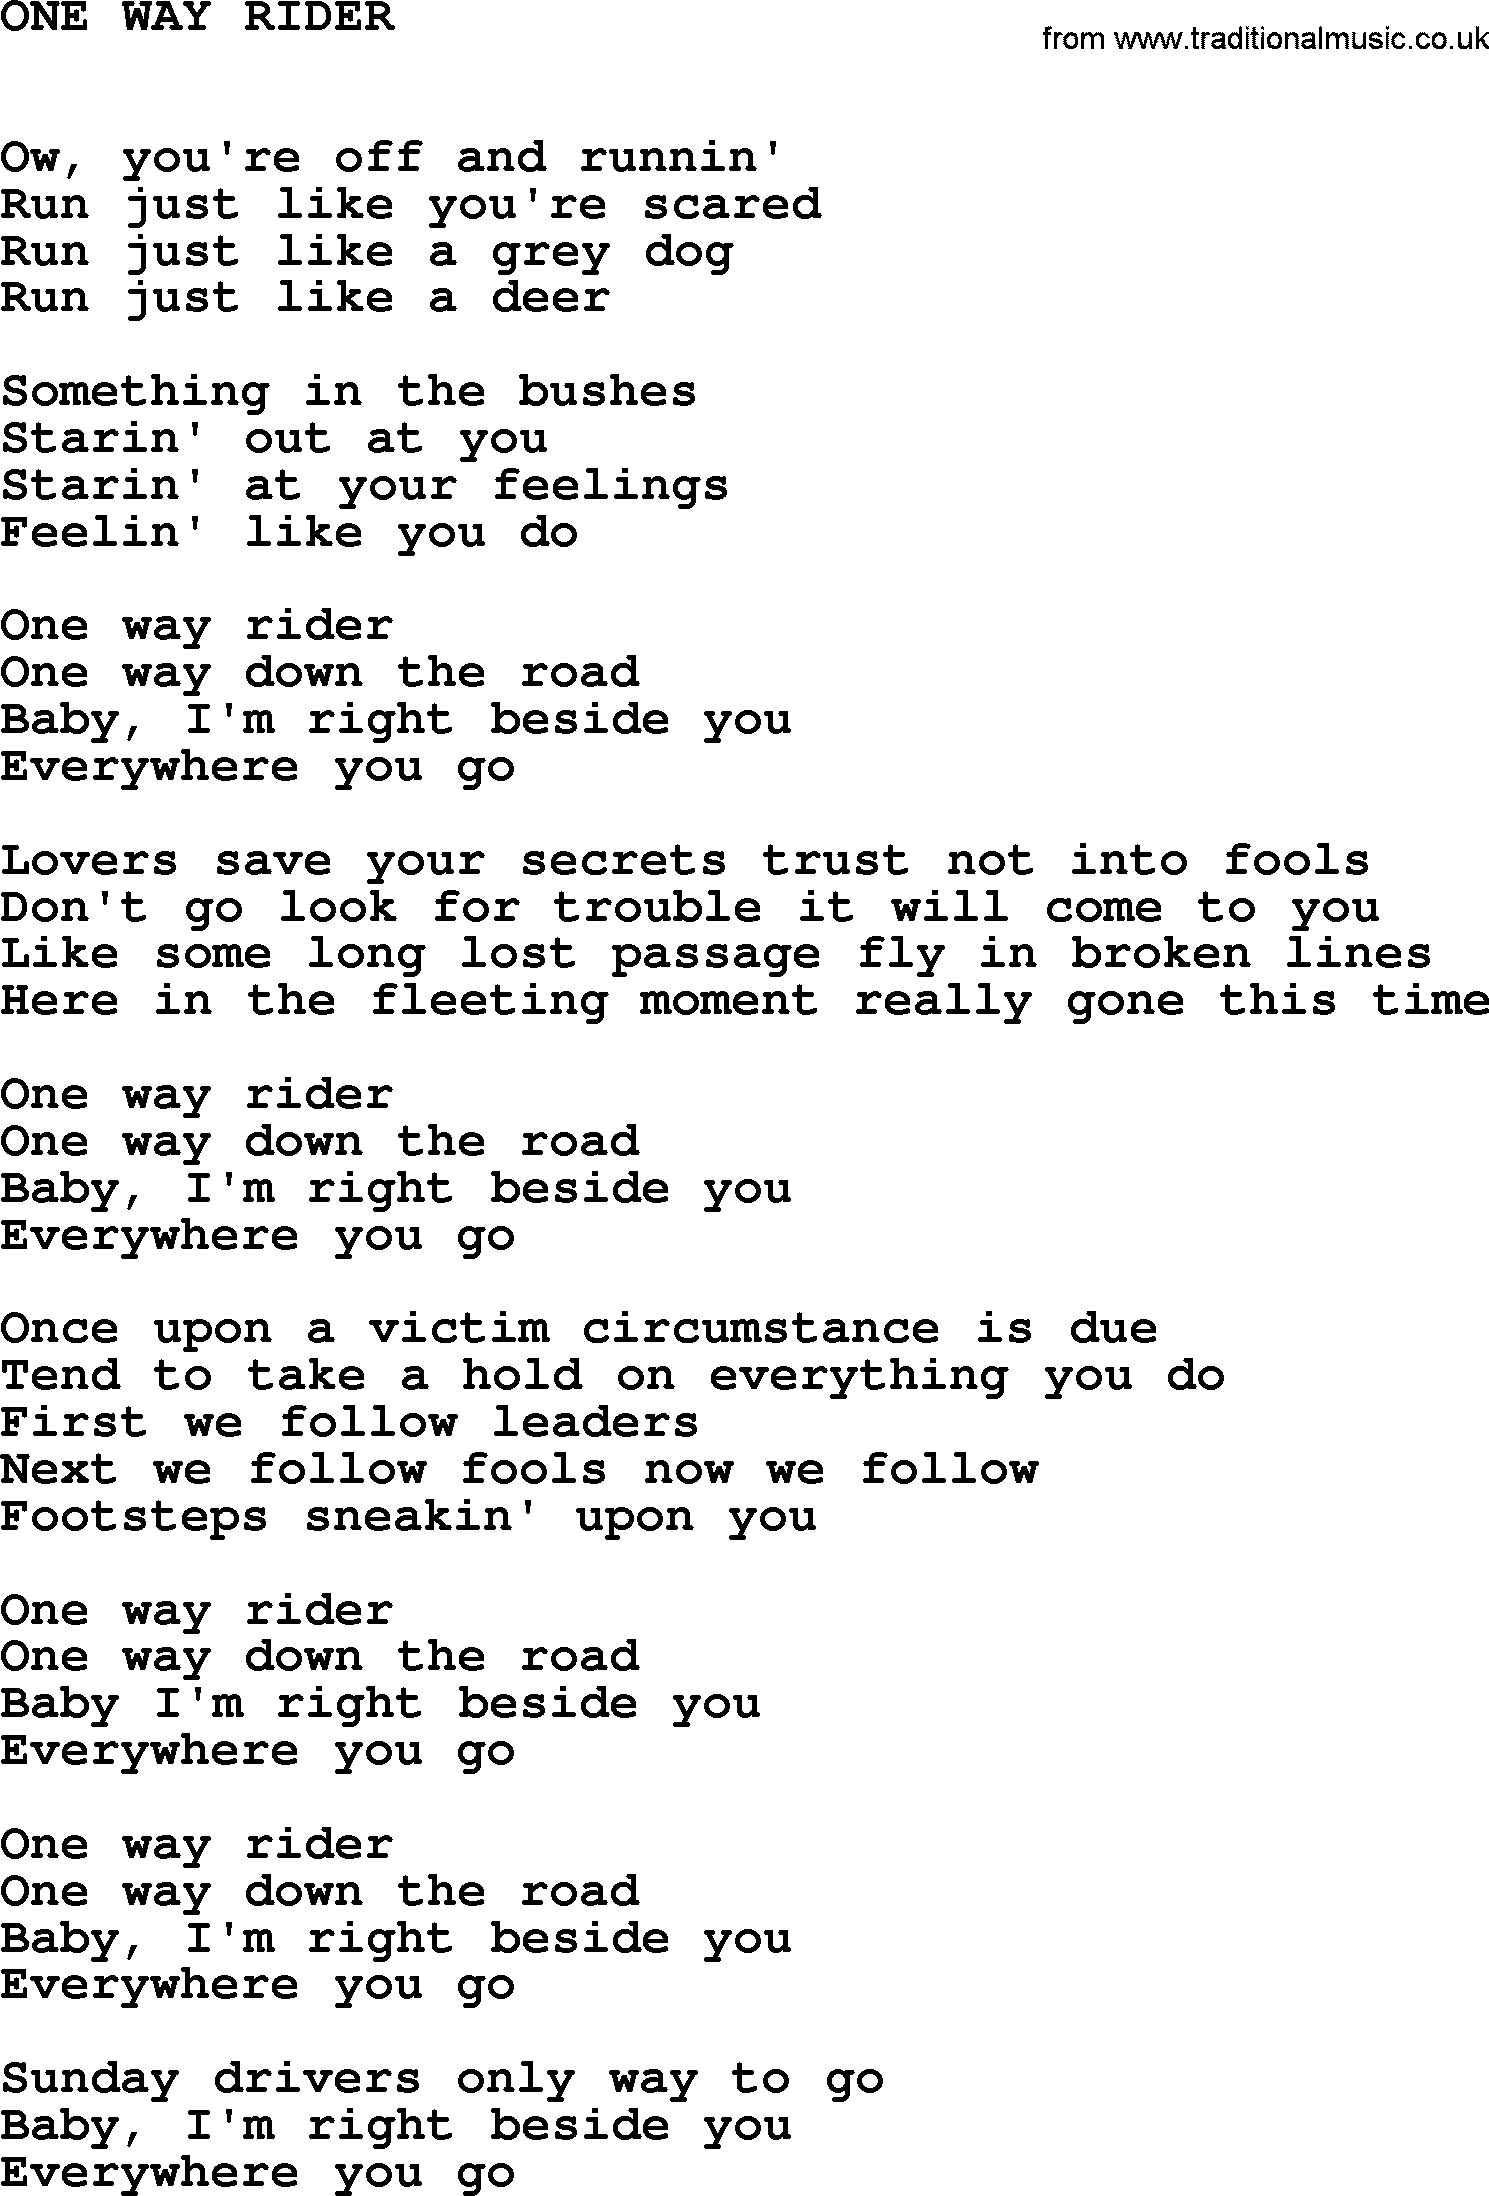 Johnny Cash song One Way Rider.txt lyrics